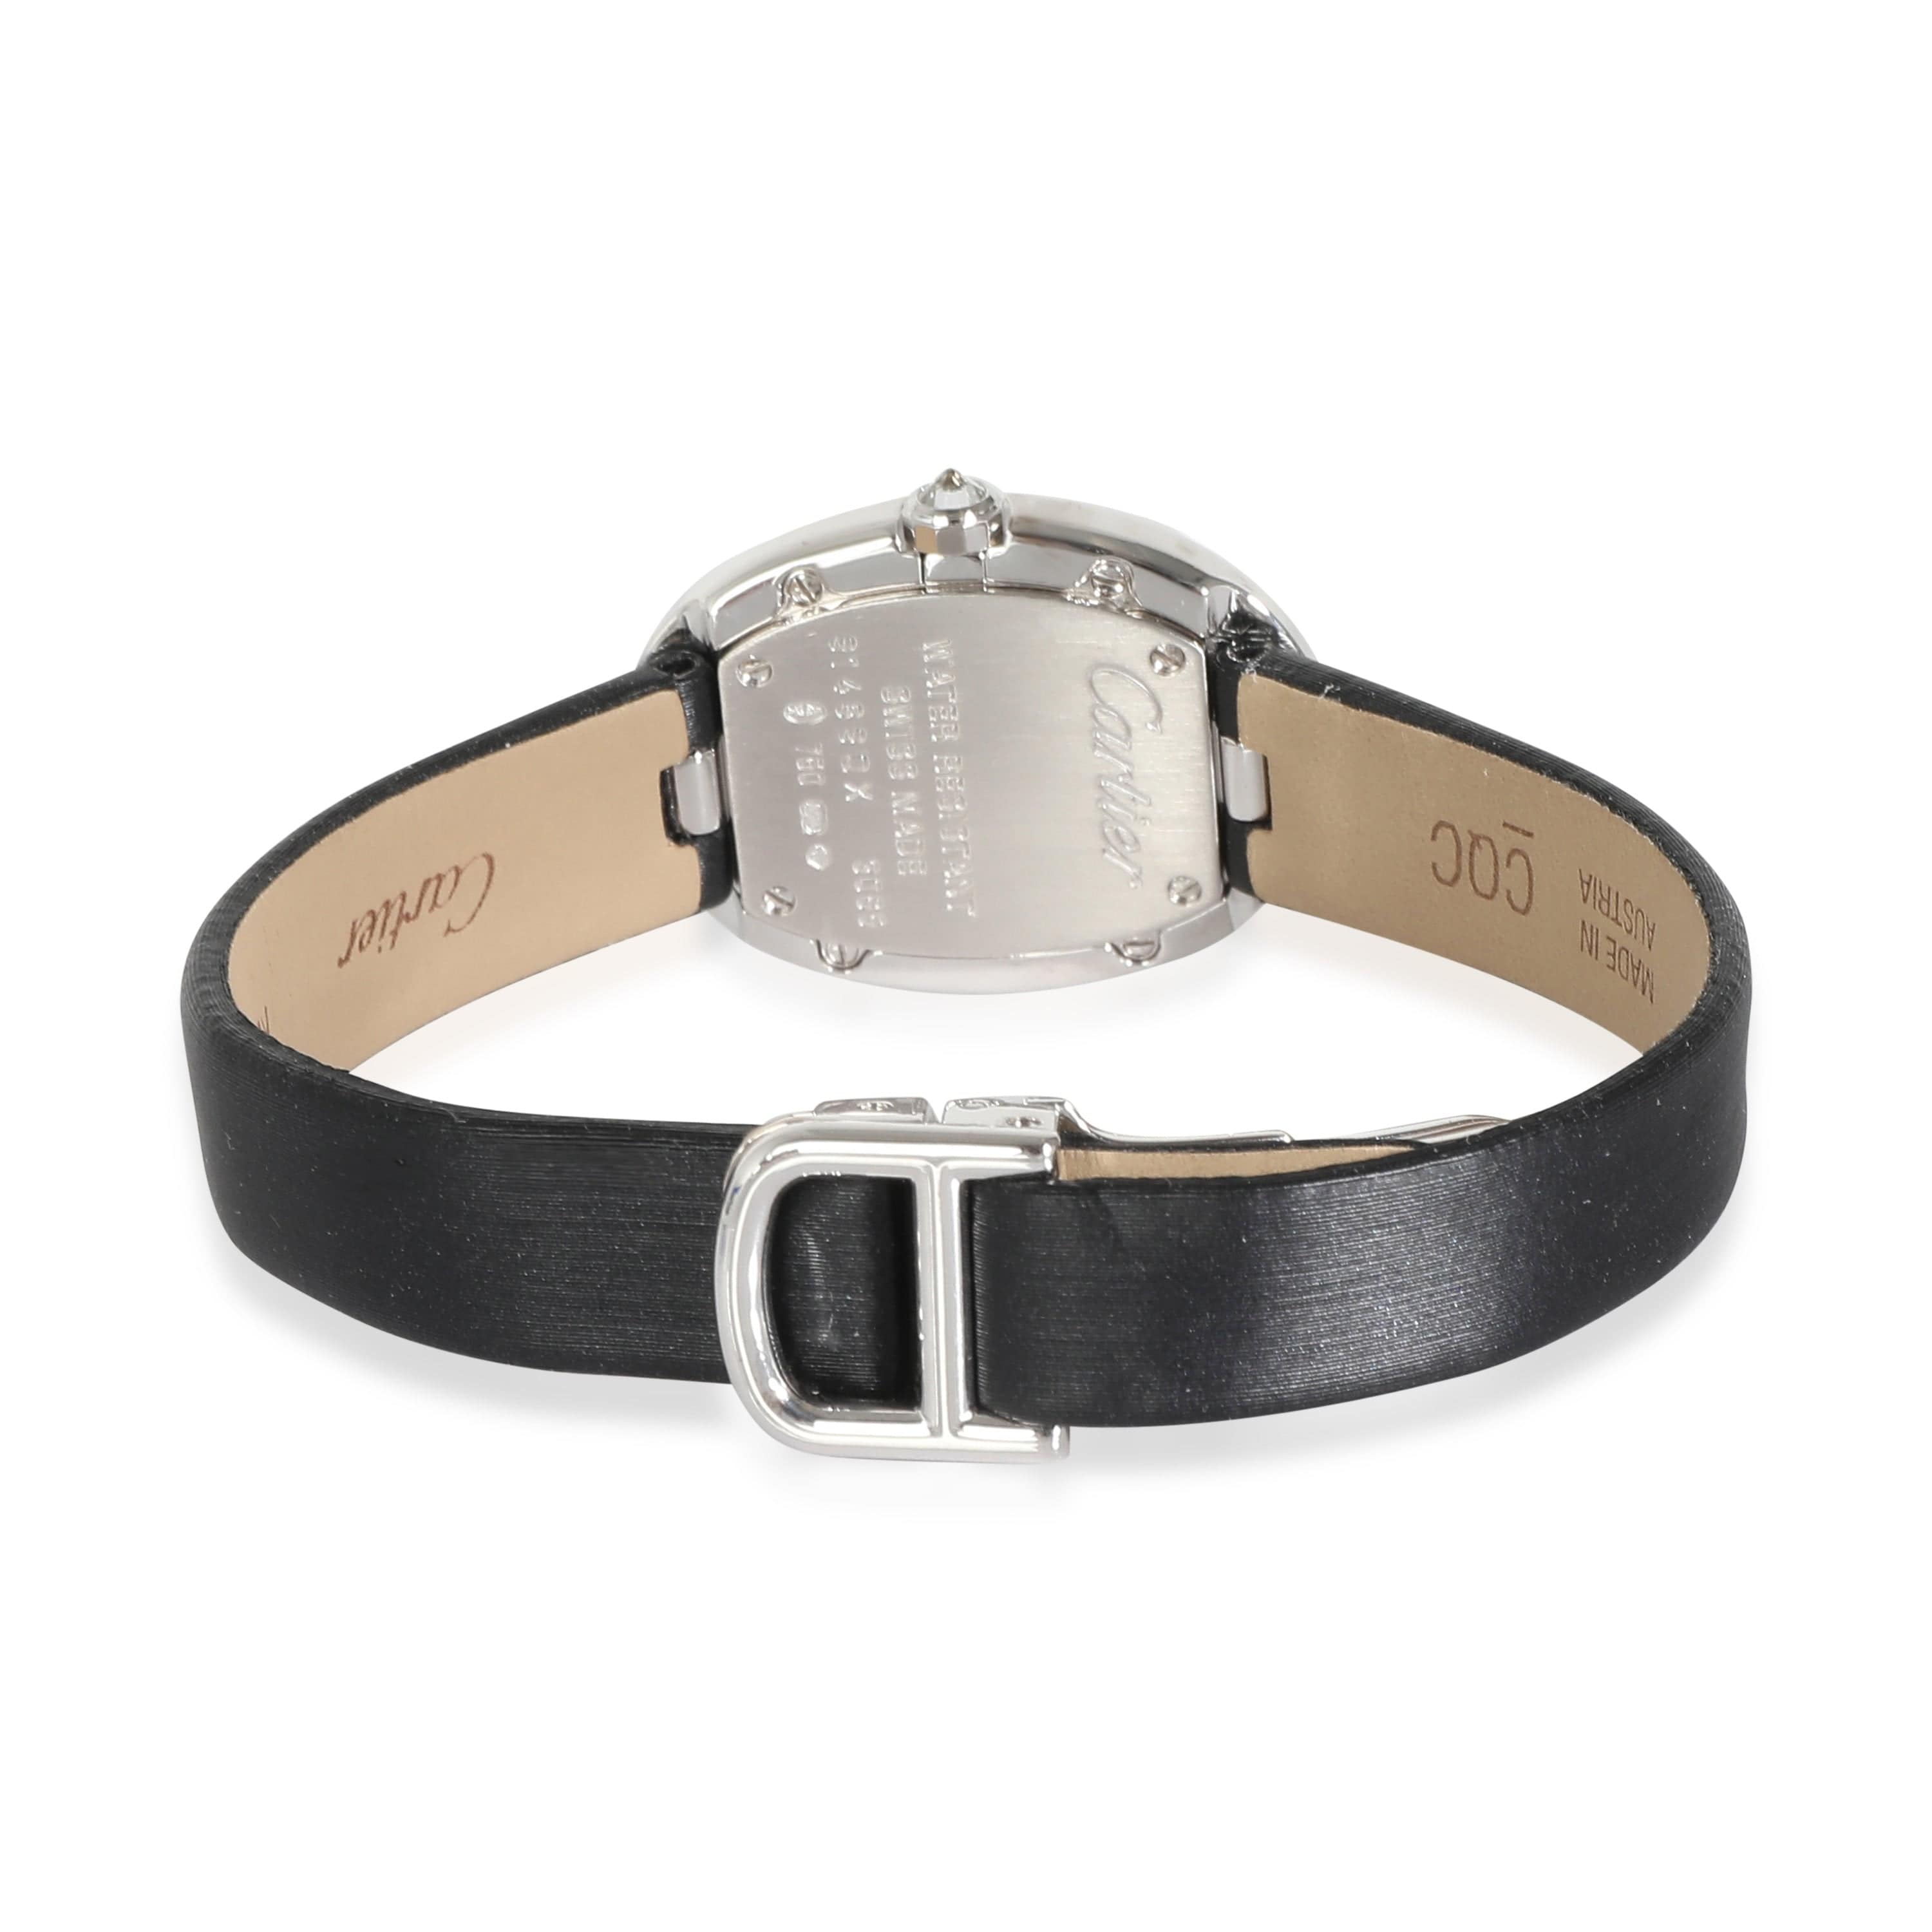 Cartier Cartier Baignoire WB520027 Women's Watch in 18kt White Gold